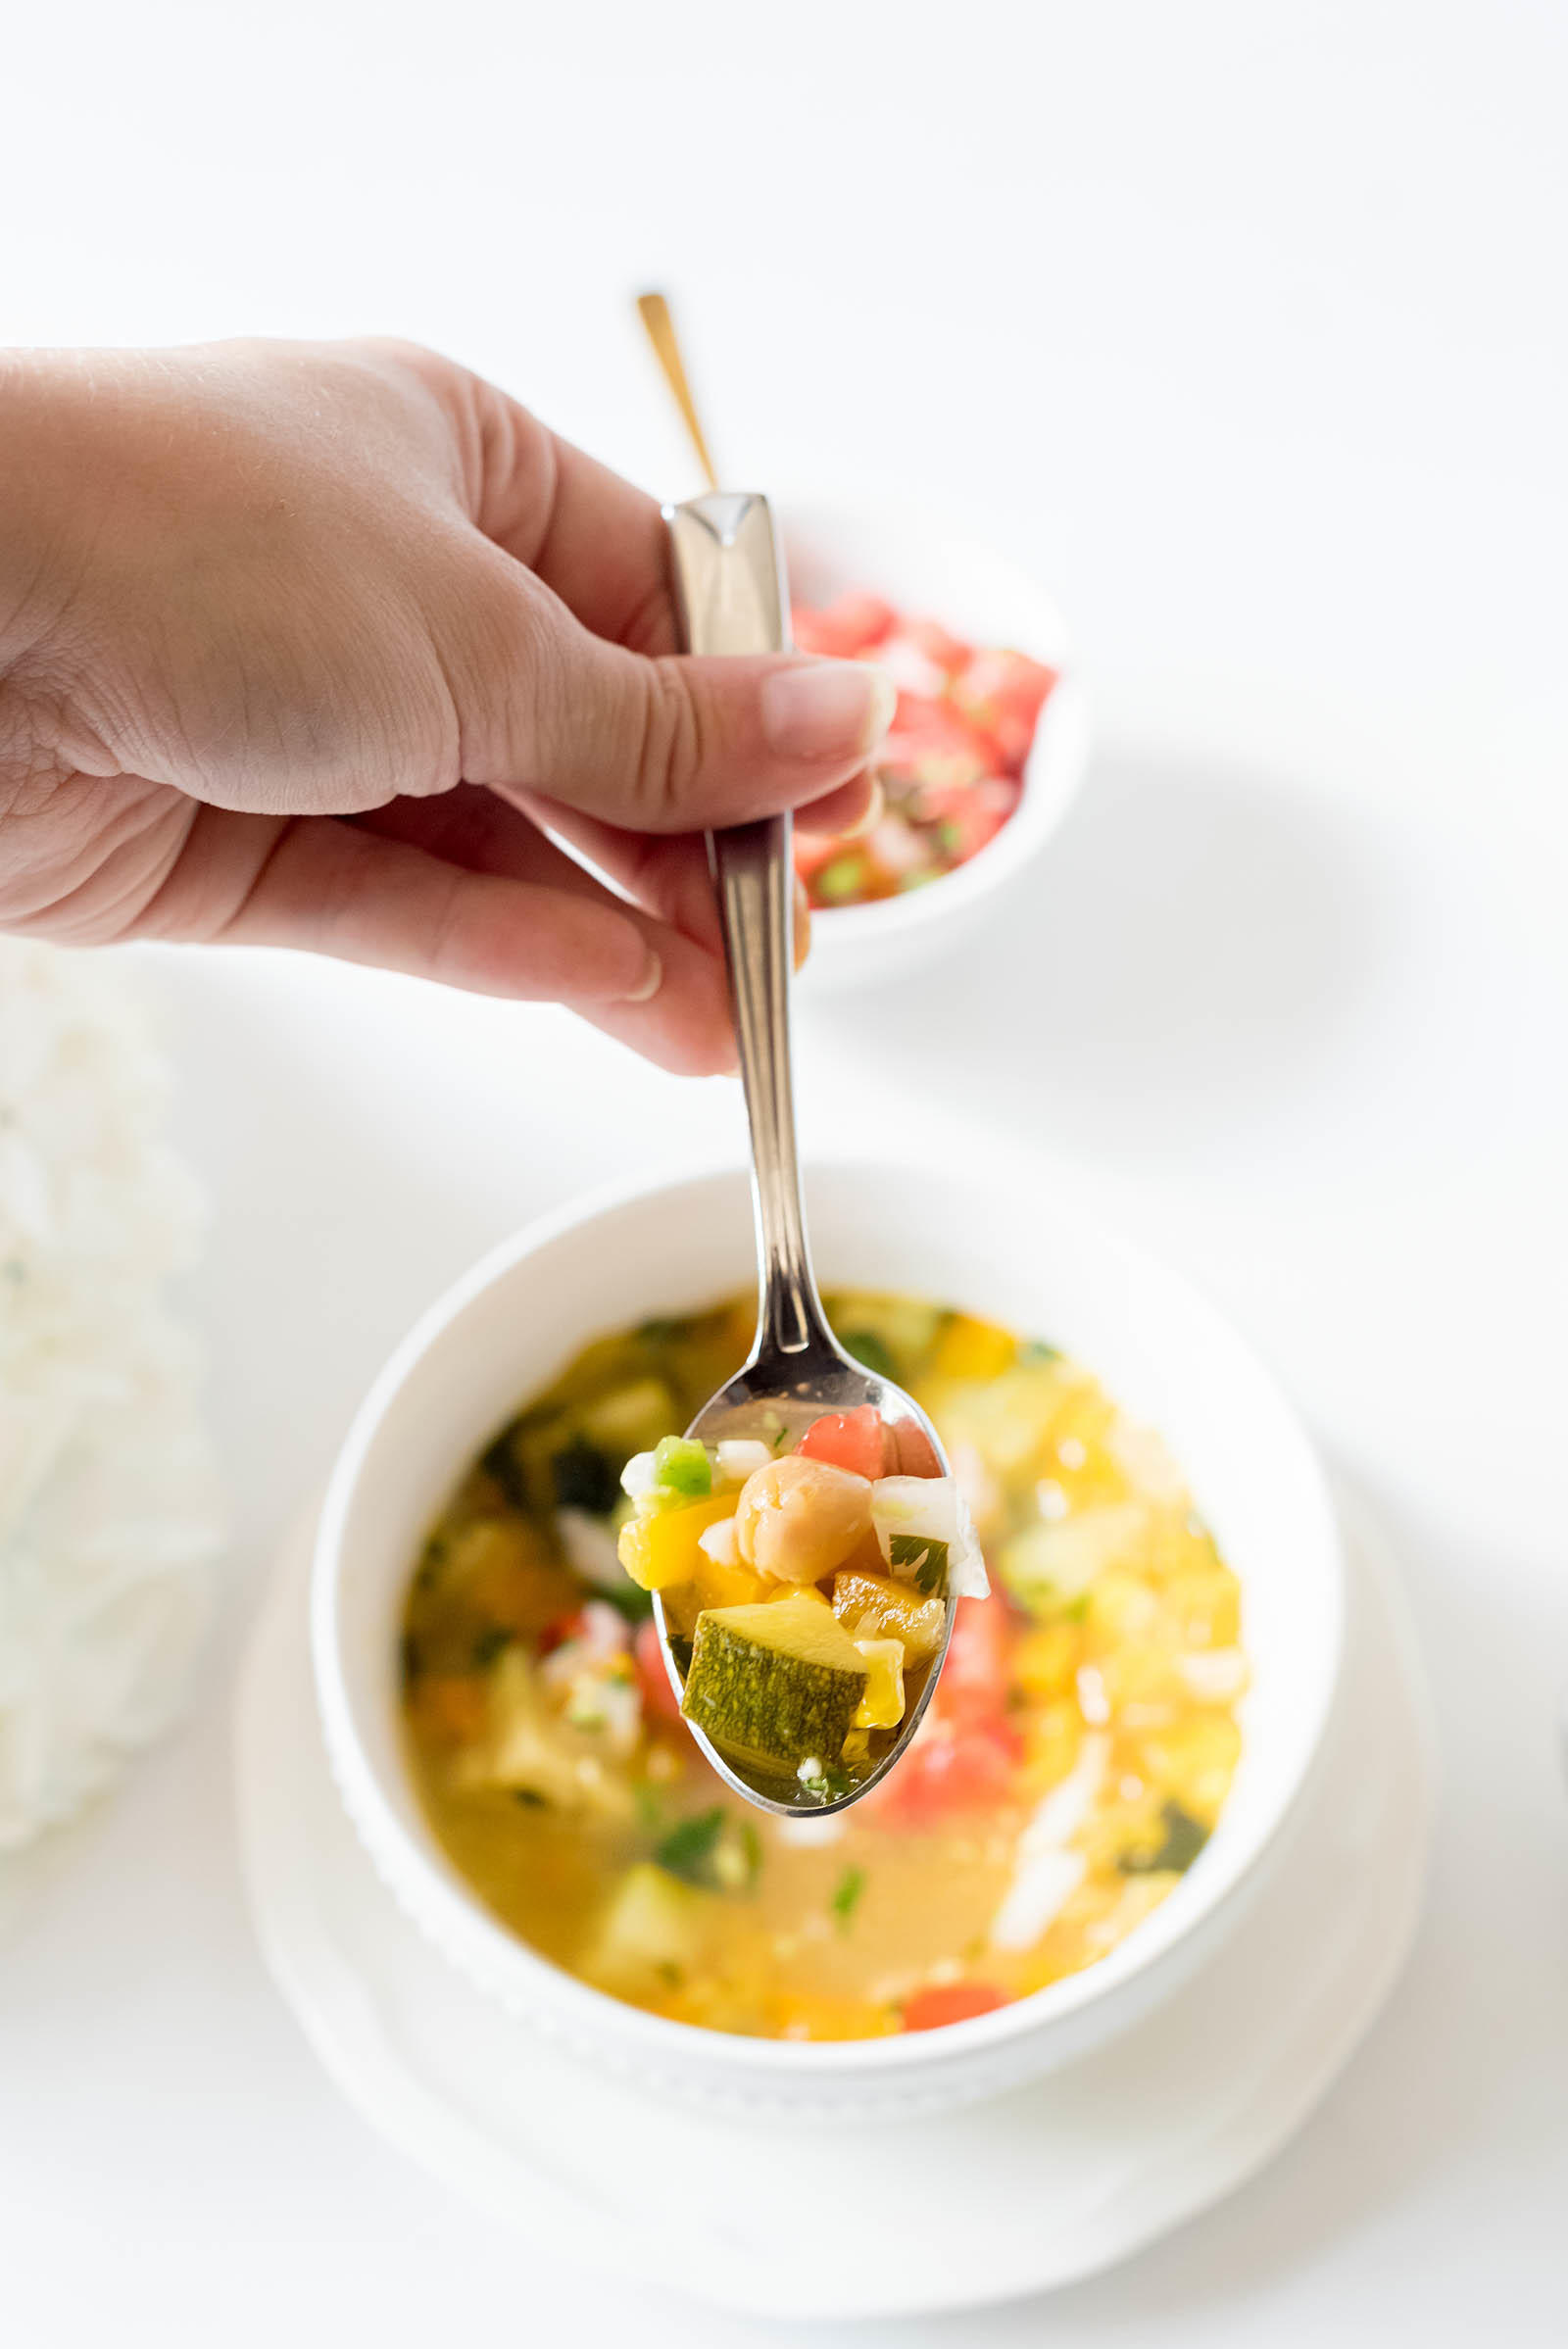 Vegetarian Tlalpeño Soup Recipe